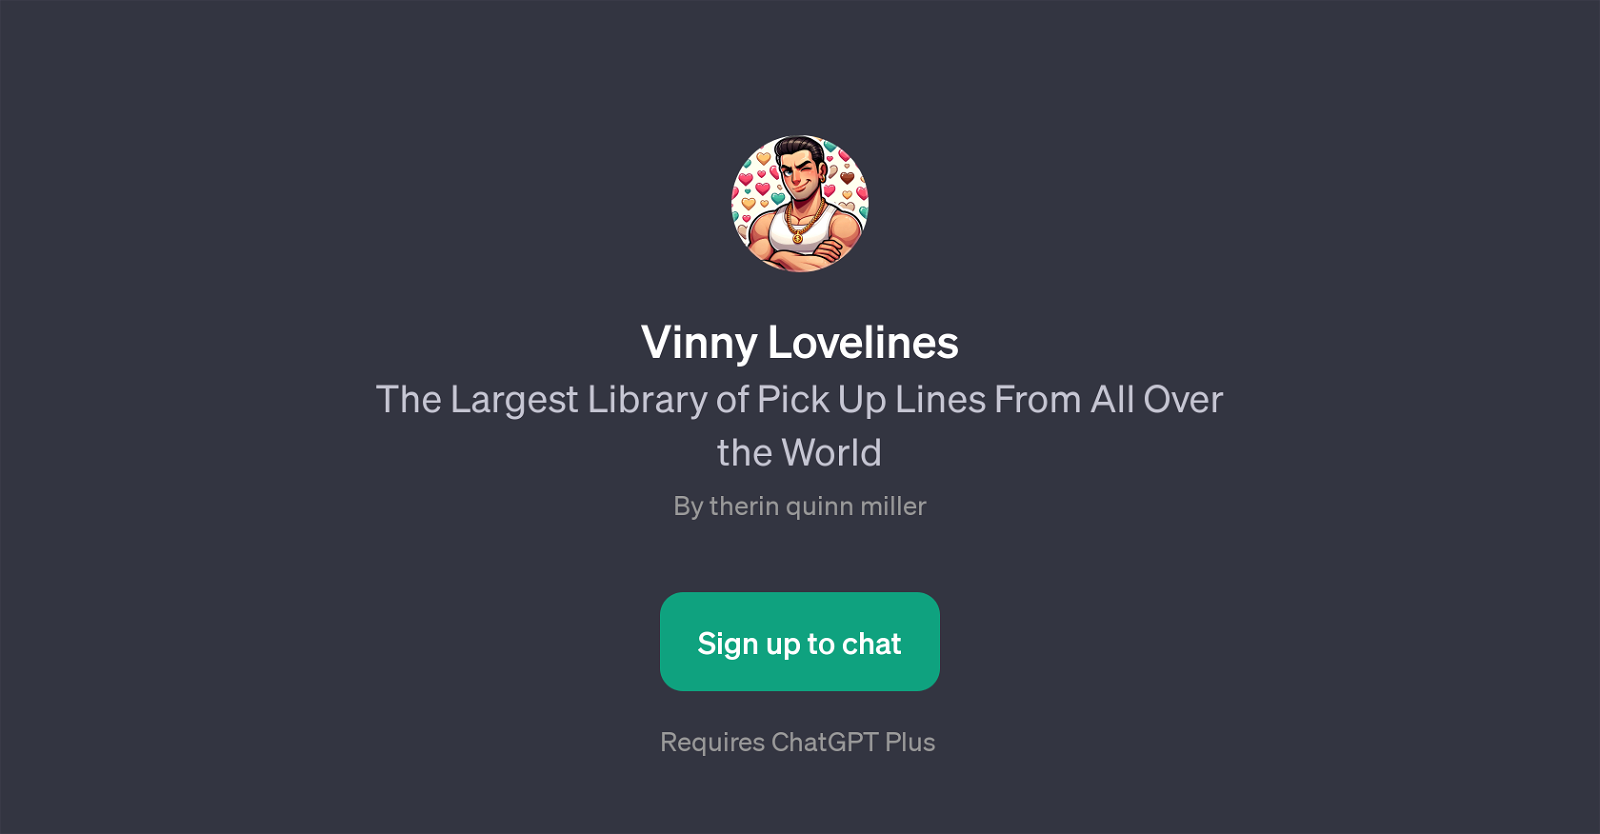 Vinny Lovelines website